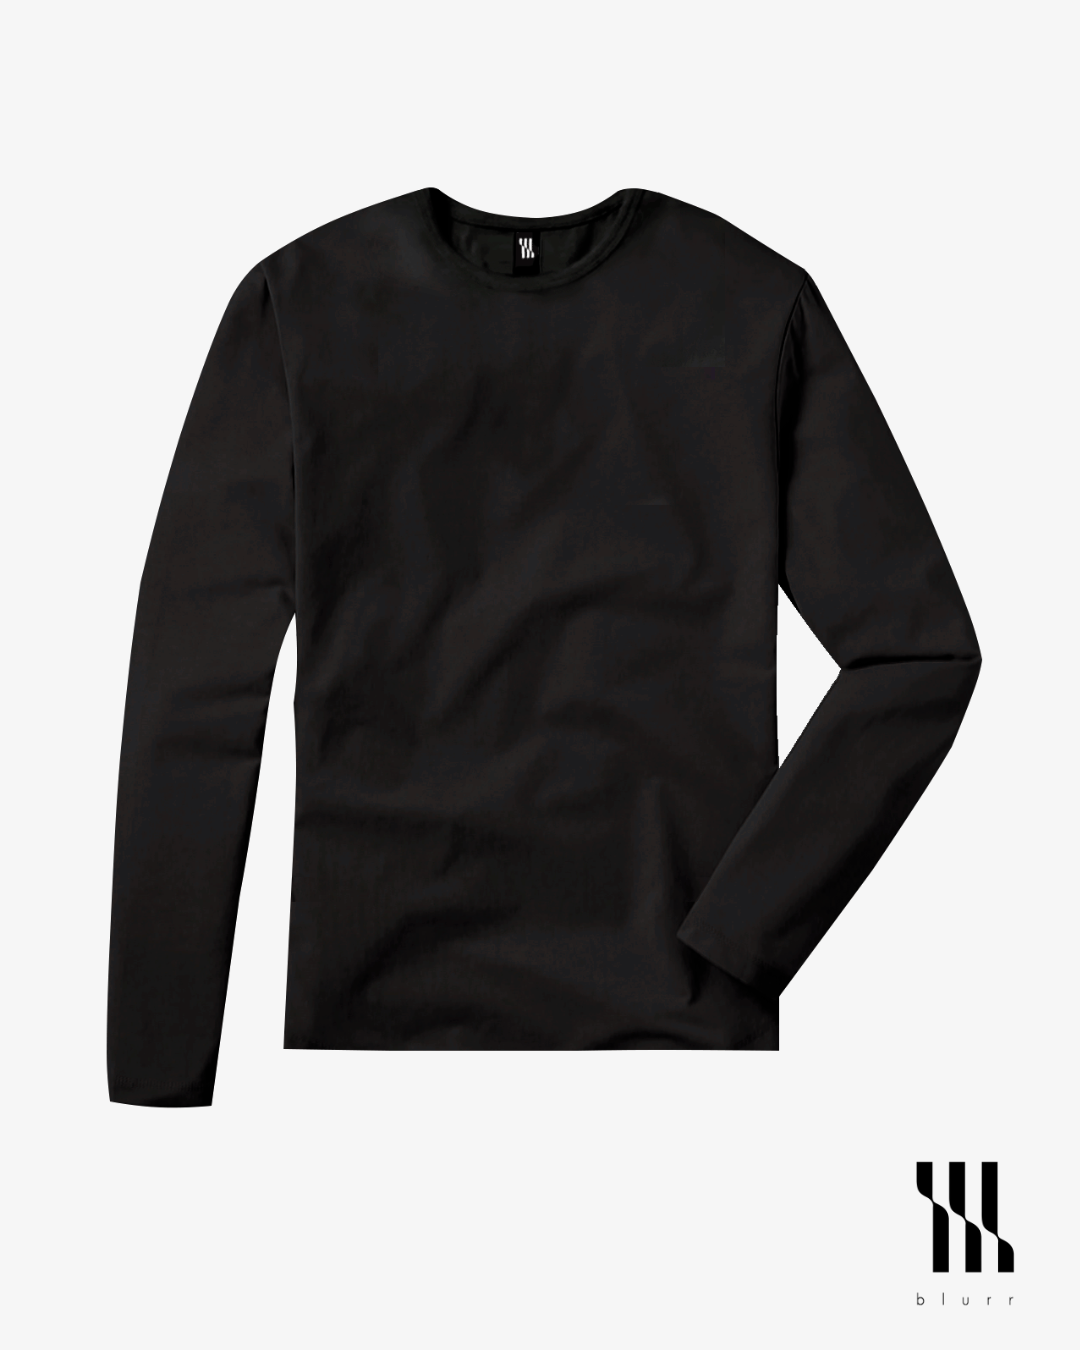 New Text All Black T-shirt - Long Sleeve